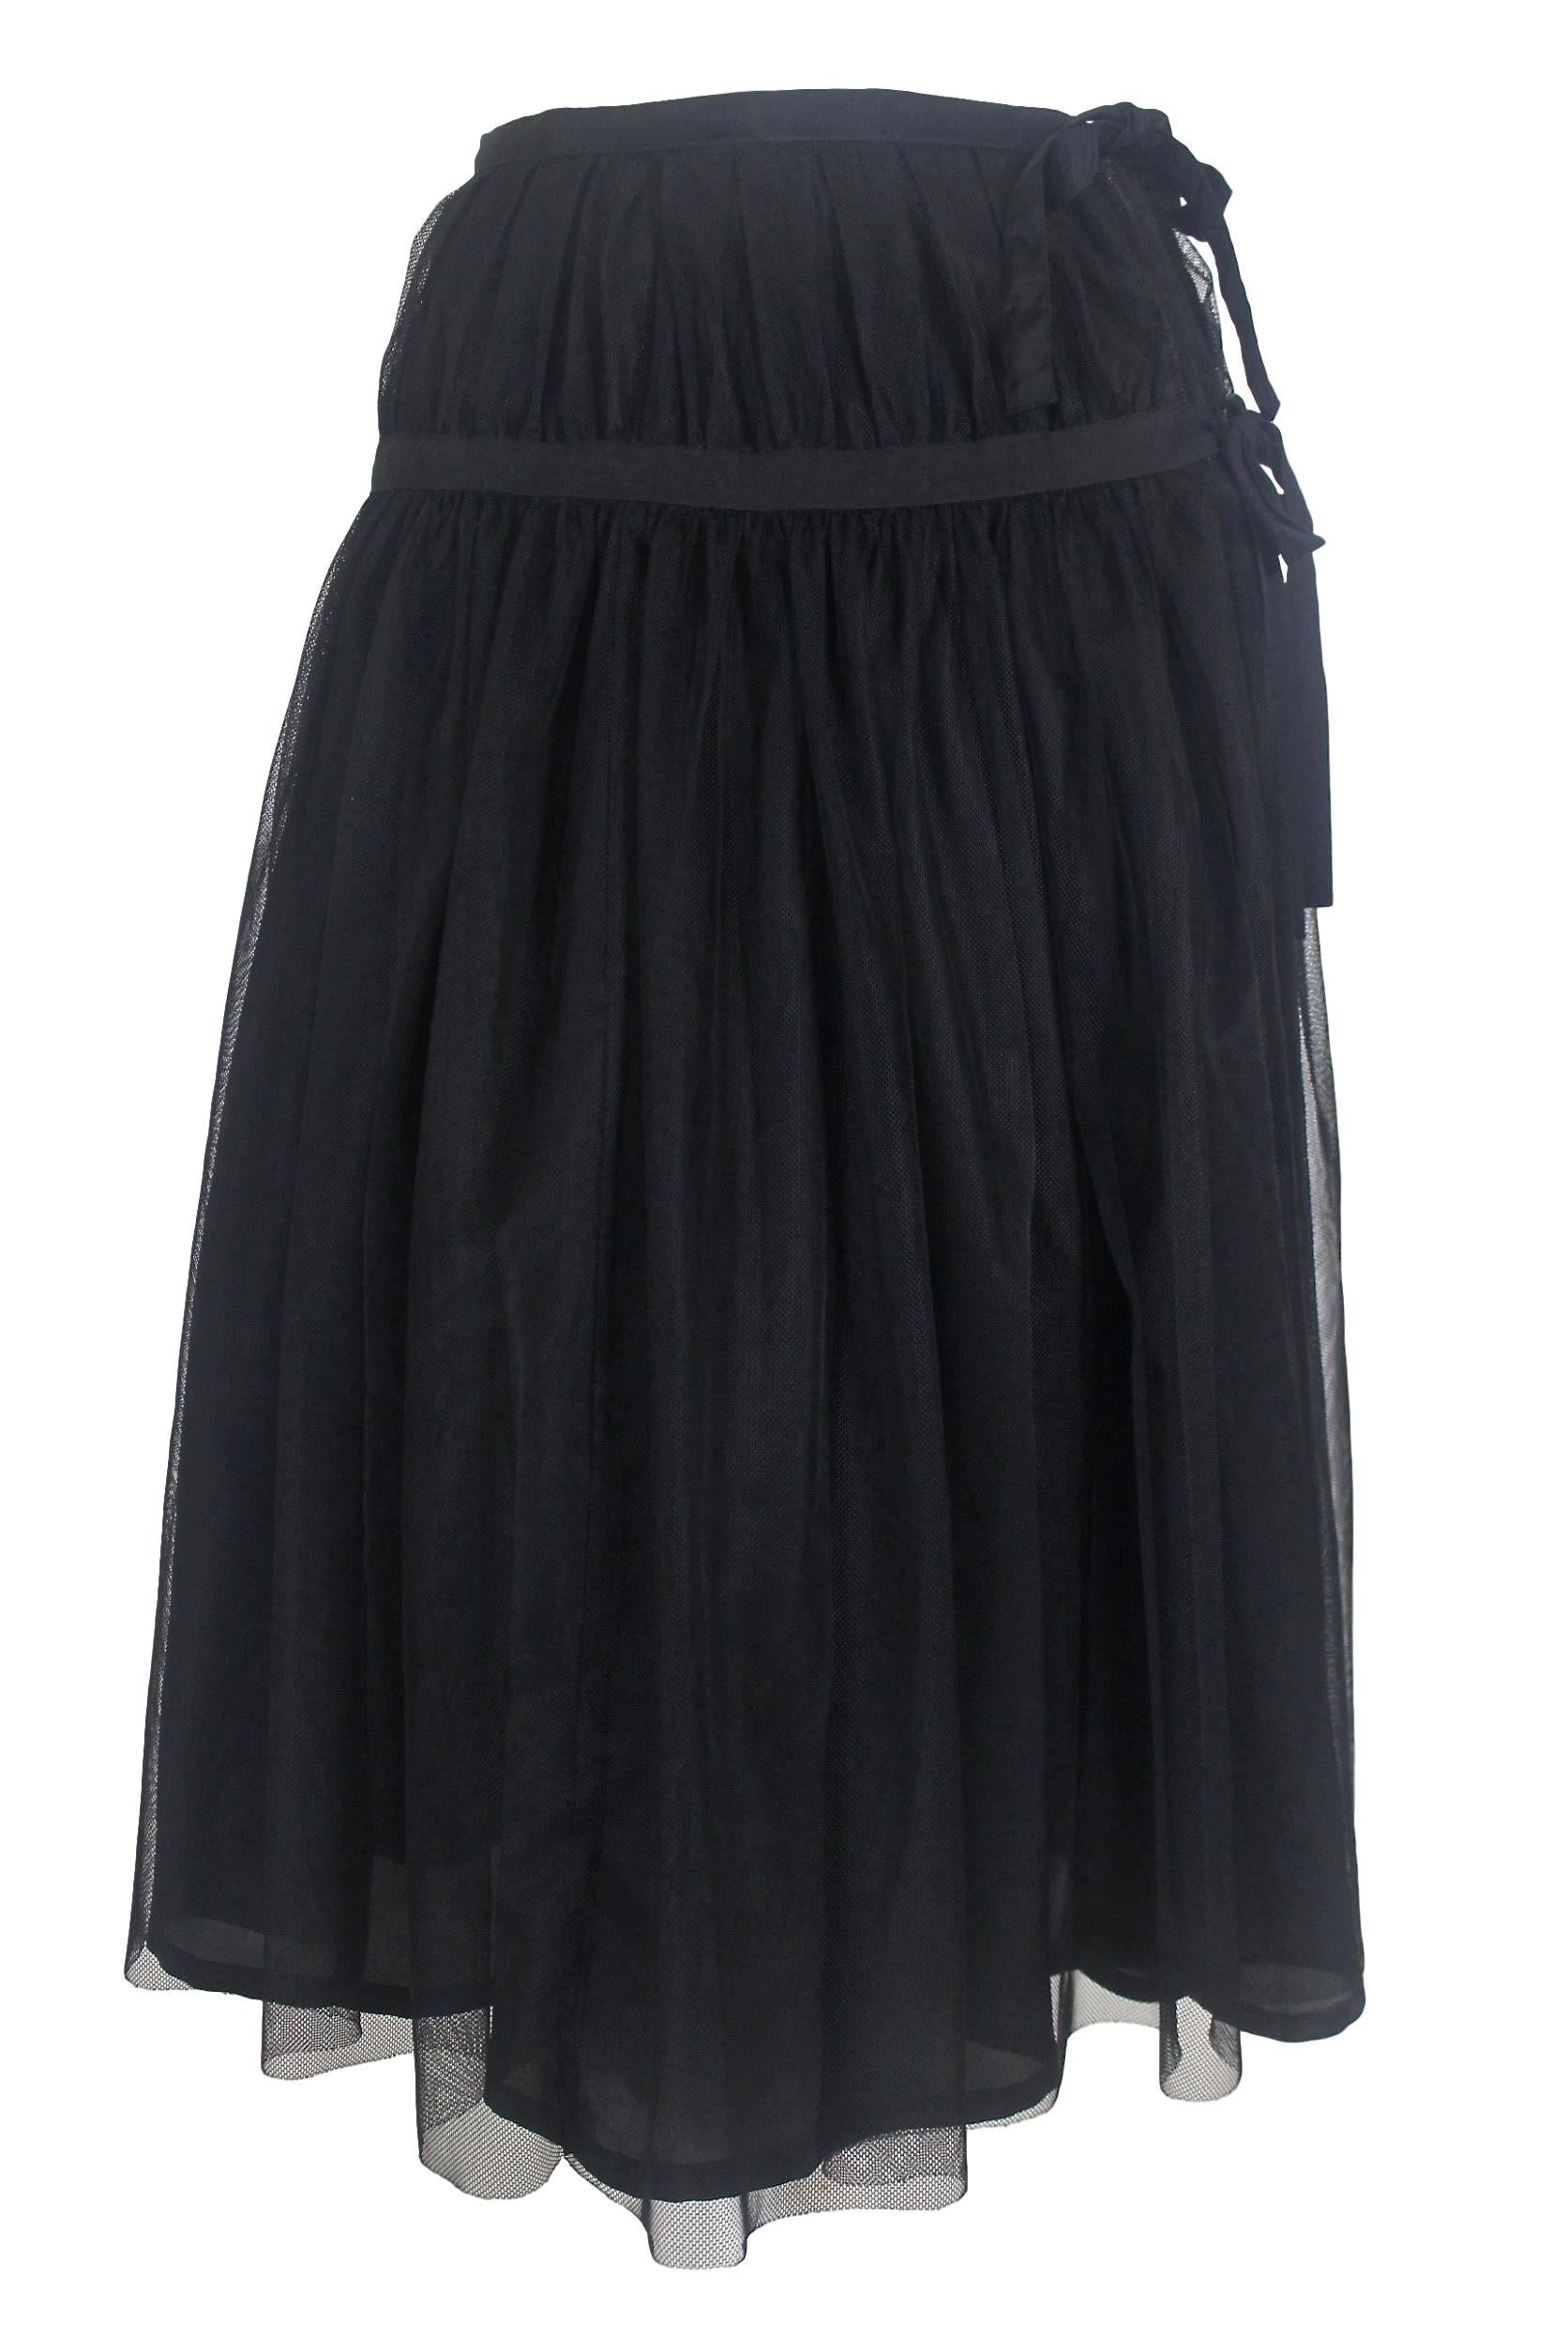 Comme des Garcons Tricot Double Layer Wrap Skirt 2007 For Sale 6